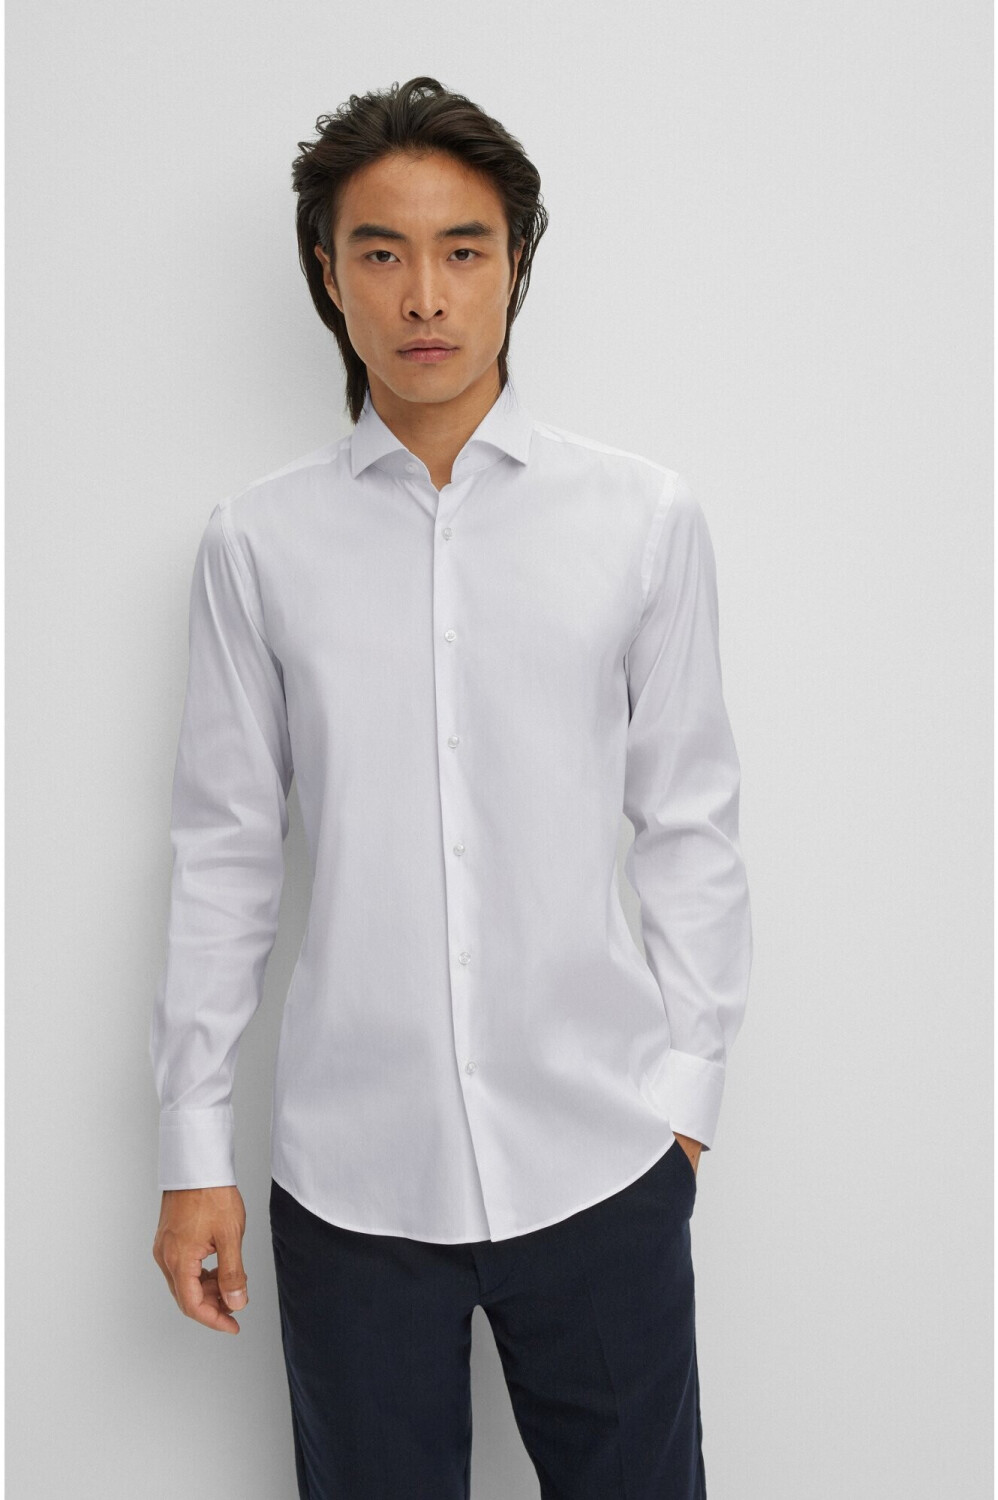 BOSS - Slim-fit shirt in easy-iron cotton-blend poplin